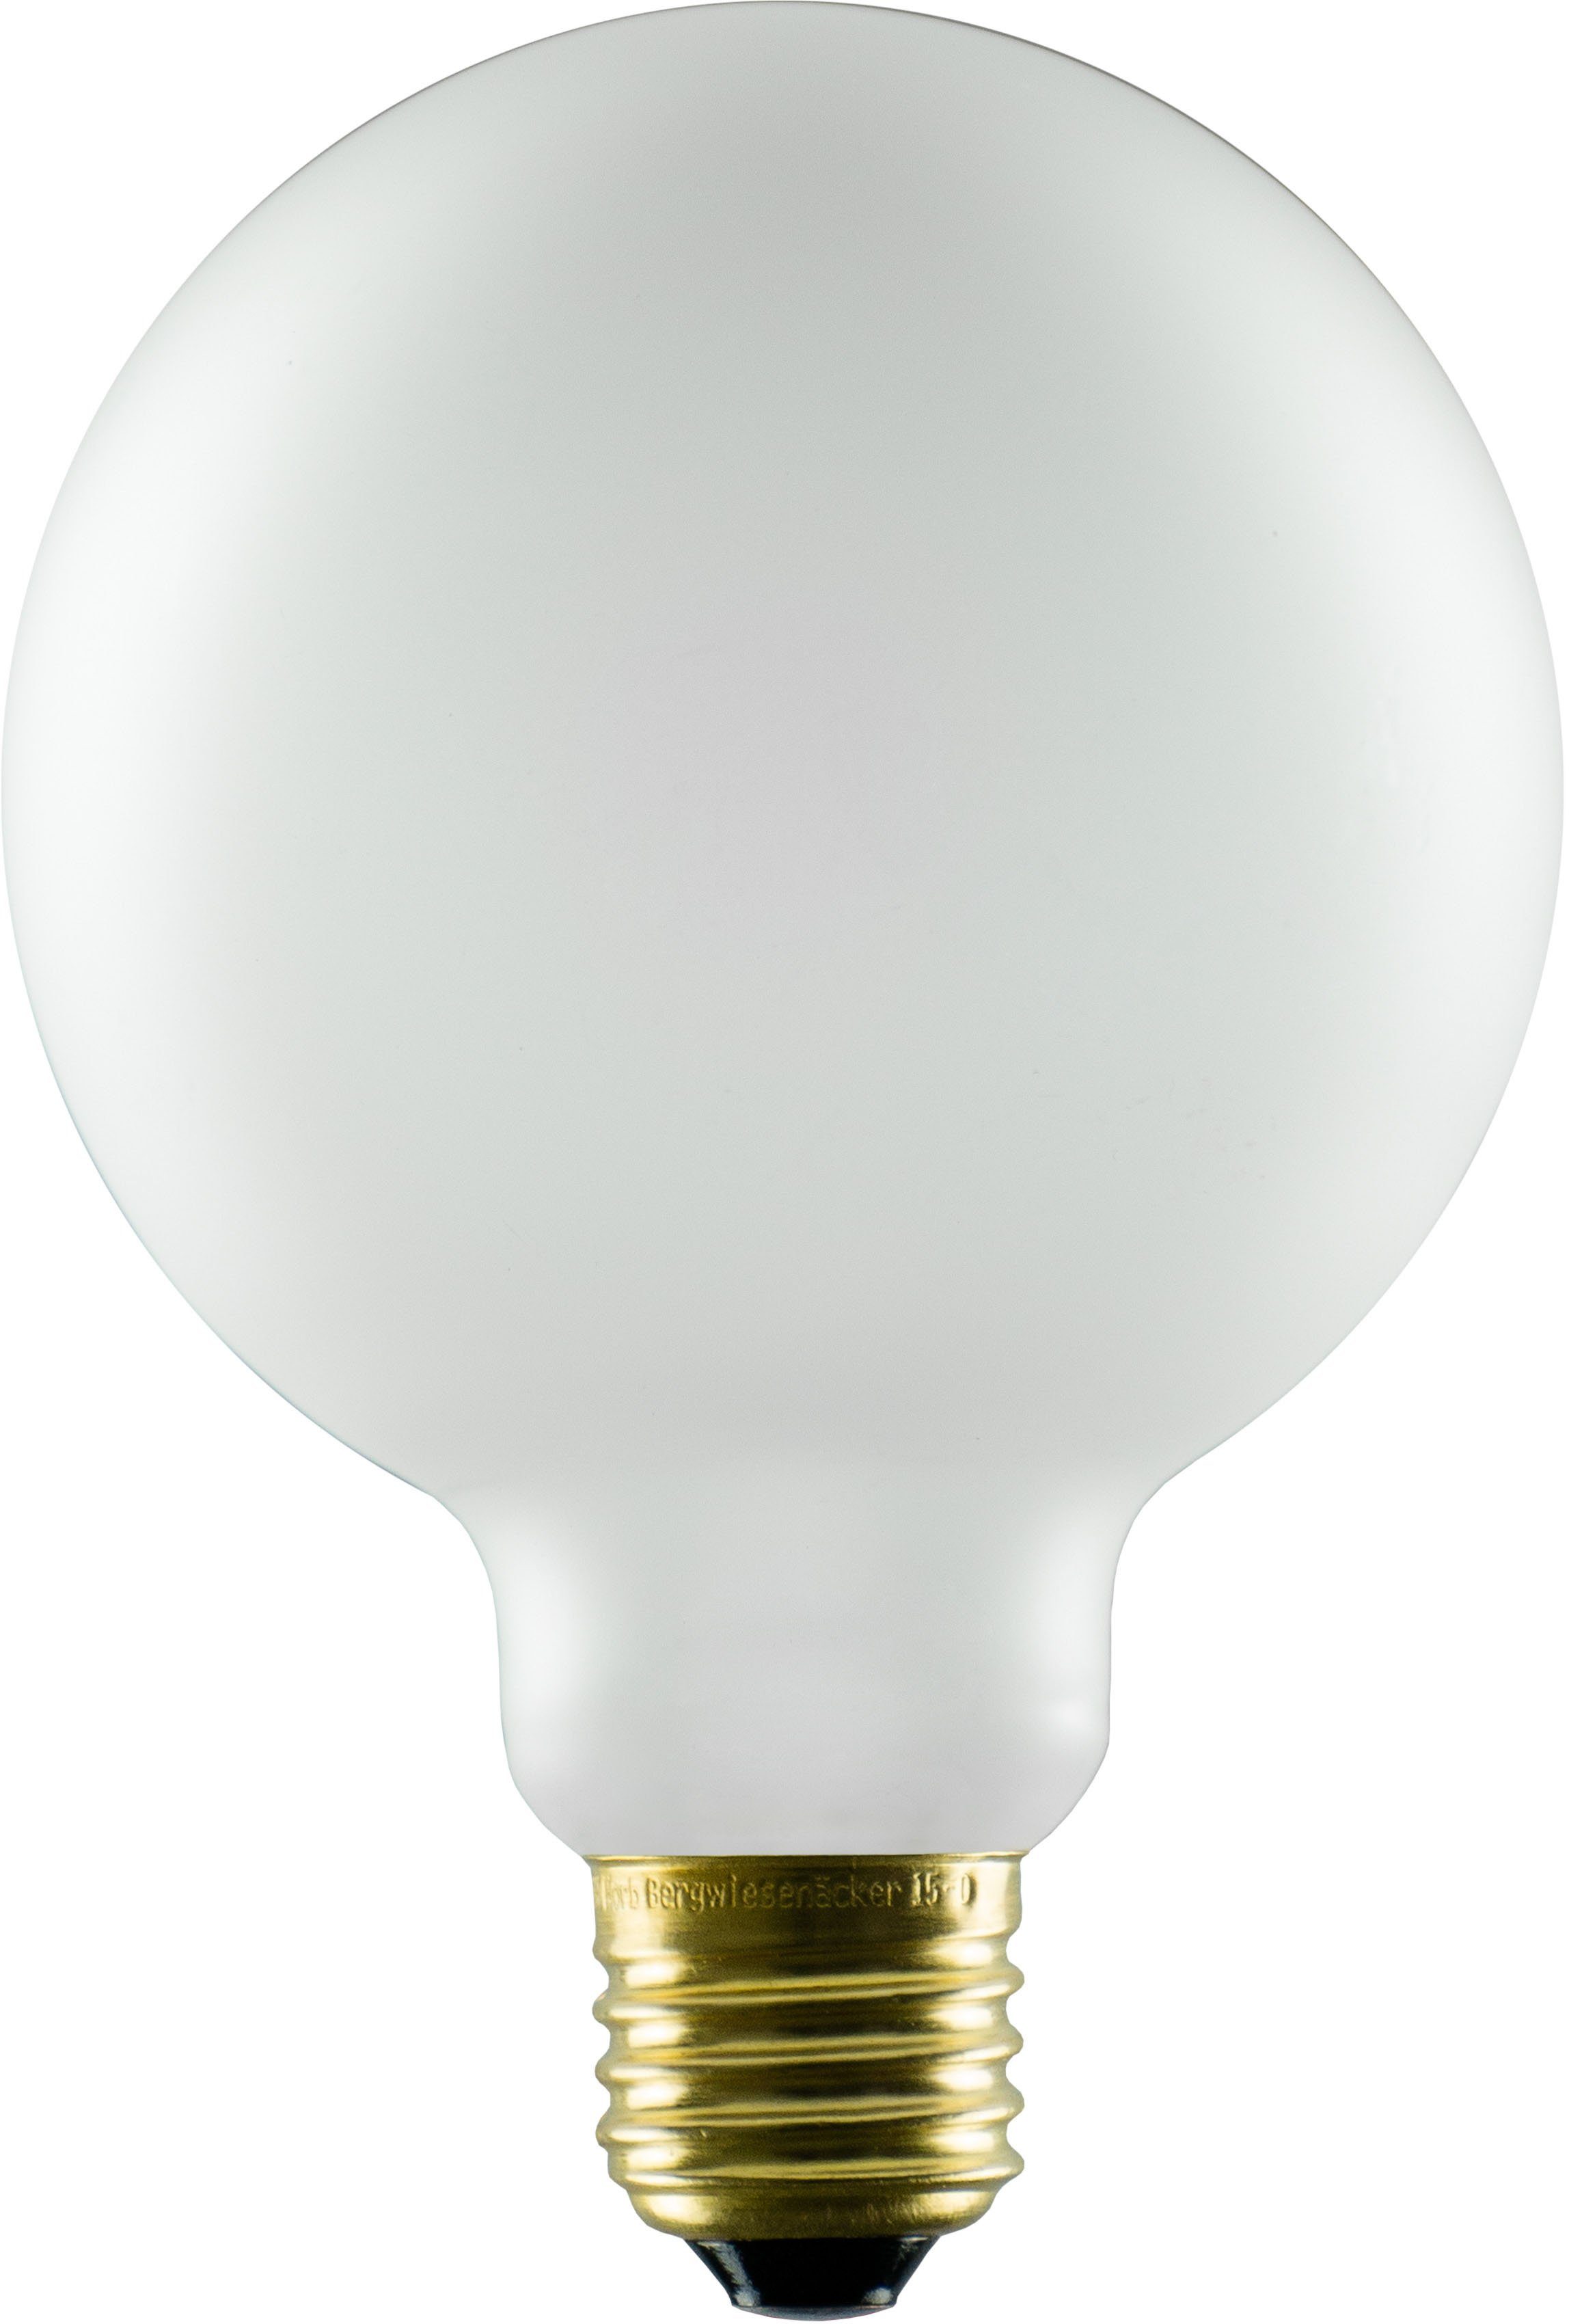 SEGULA LED-Leuchtmittel LED Globe 95 satiniert, E27, Warmweiß, dimmbar, E27, Globe 95, satiniert